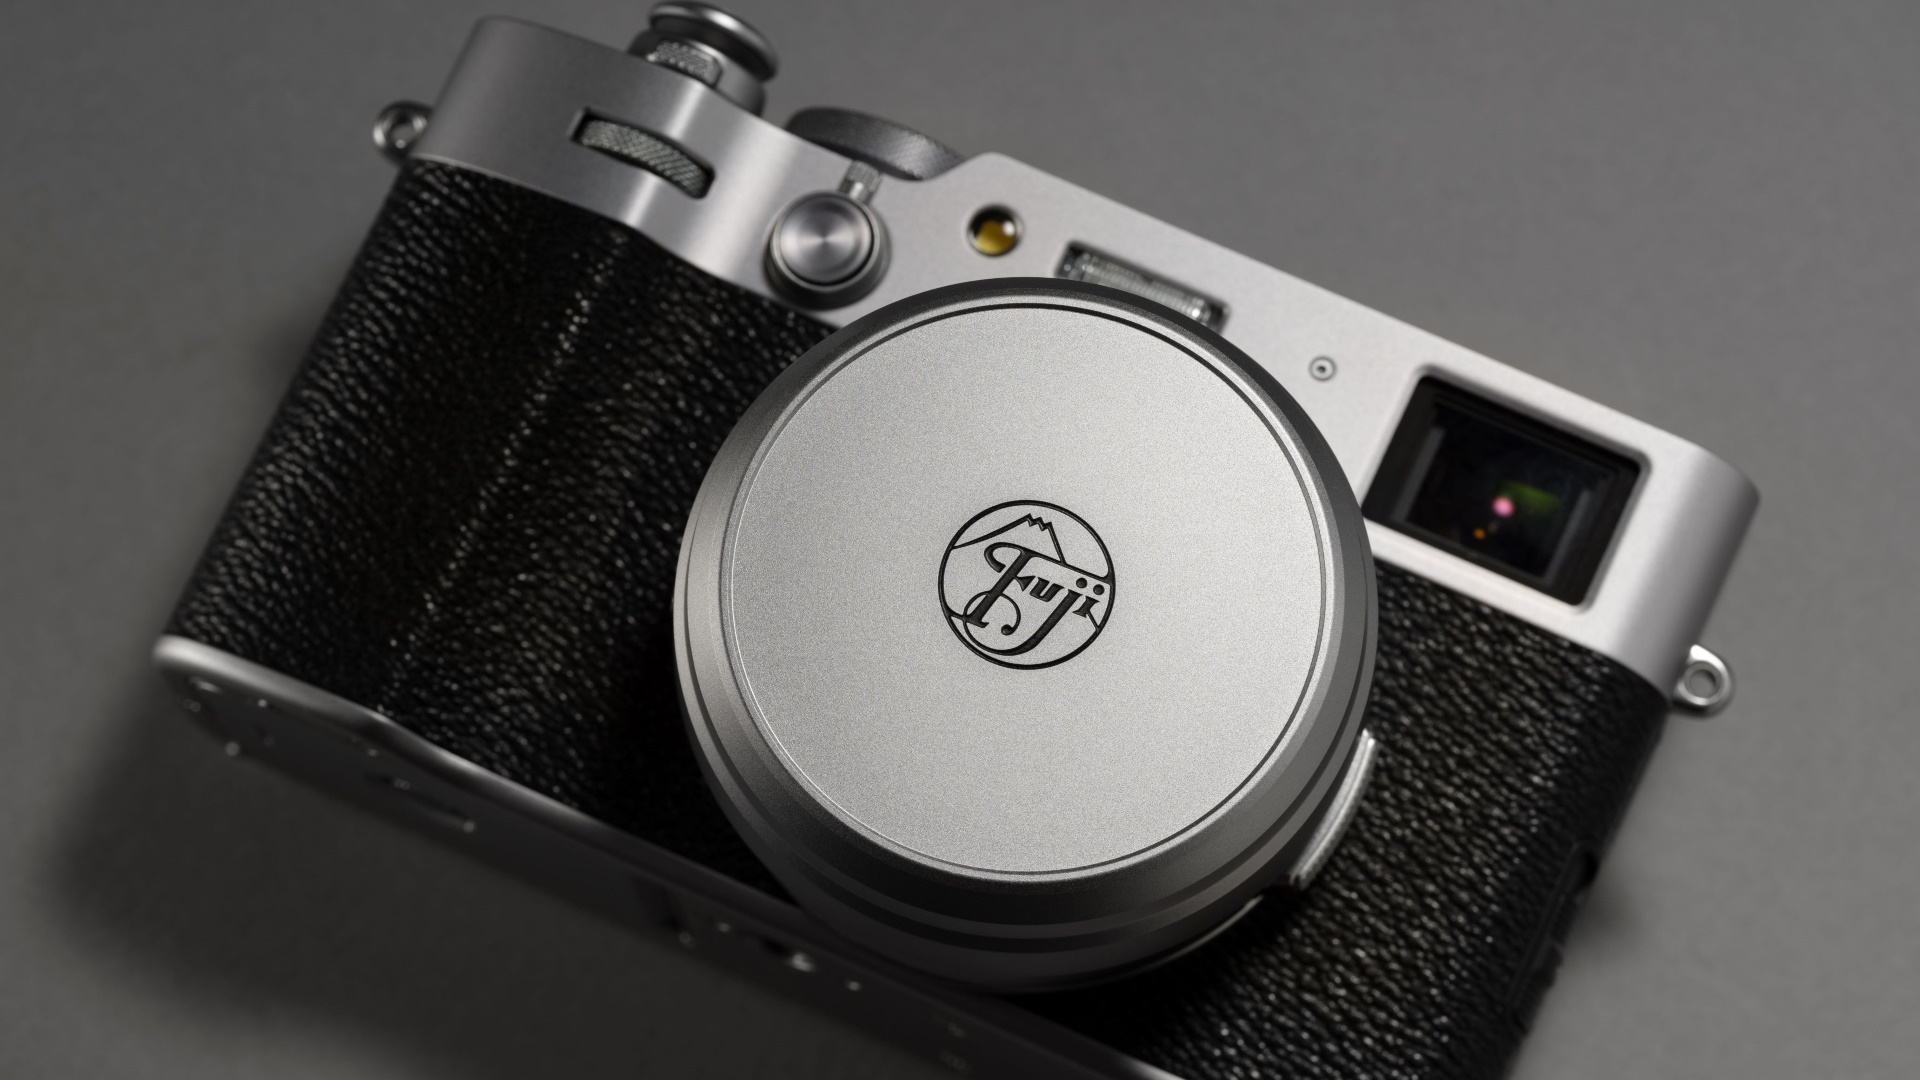 Fujifilm releases X-S20 camera, lens, XApp - GadgetMatch